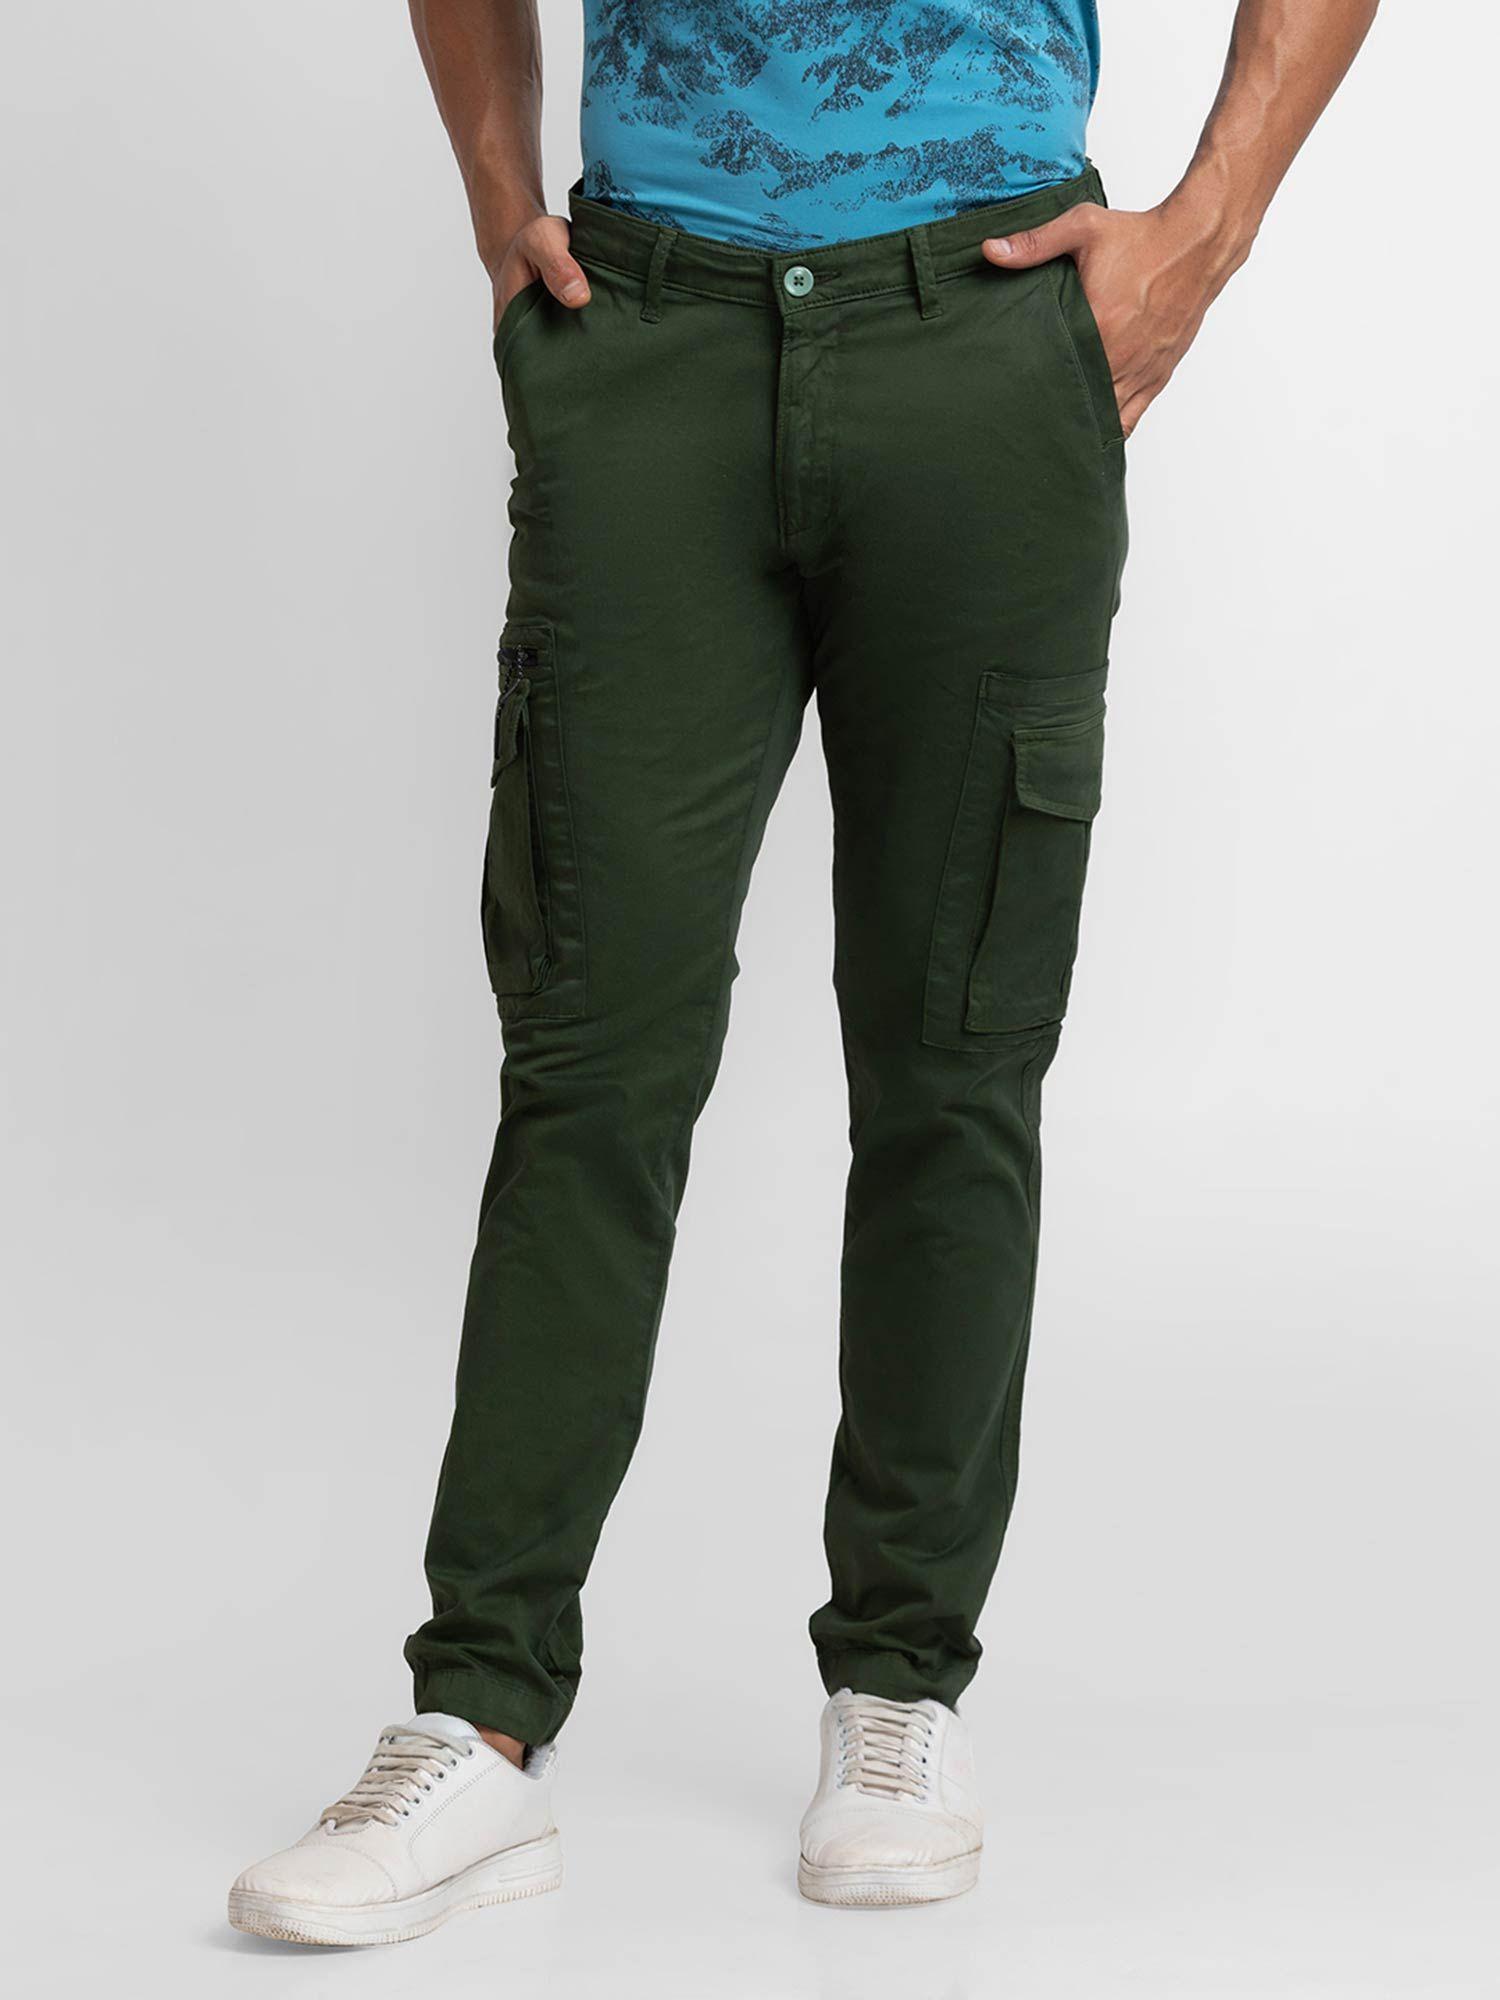 olive-green-cotton-slim-fit-regular-length-trousers-for-men